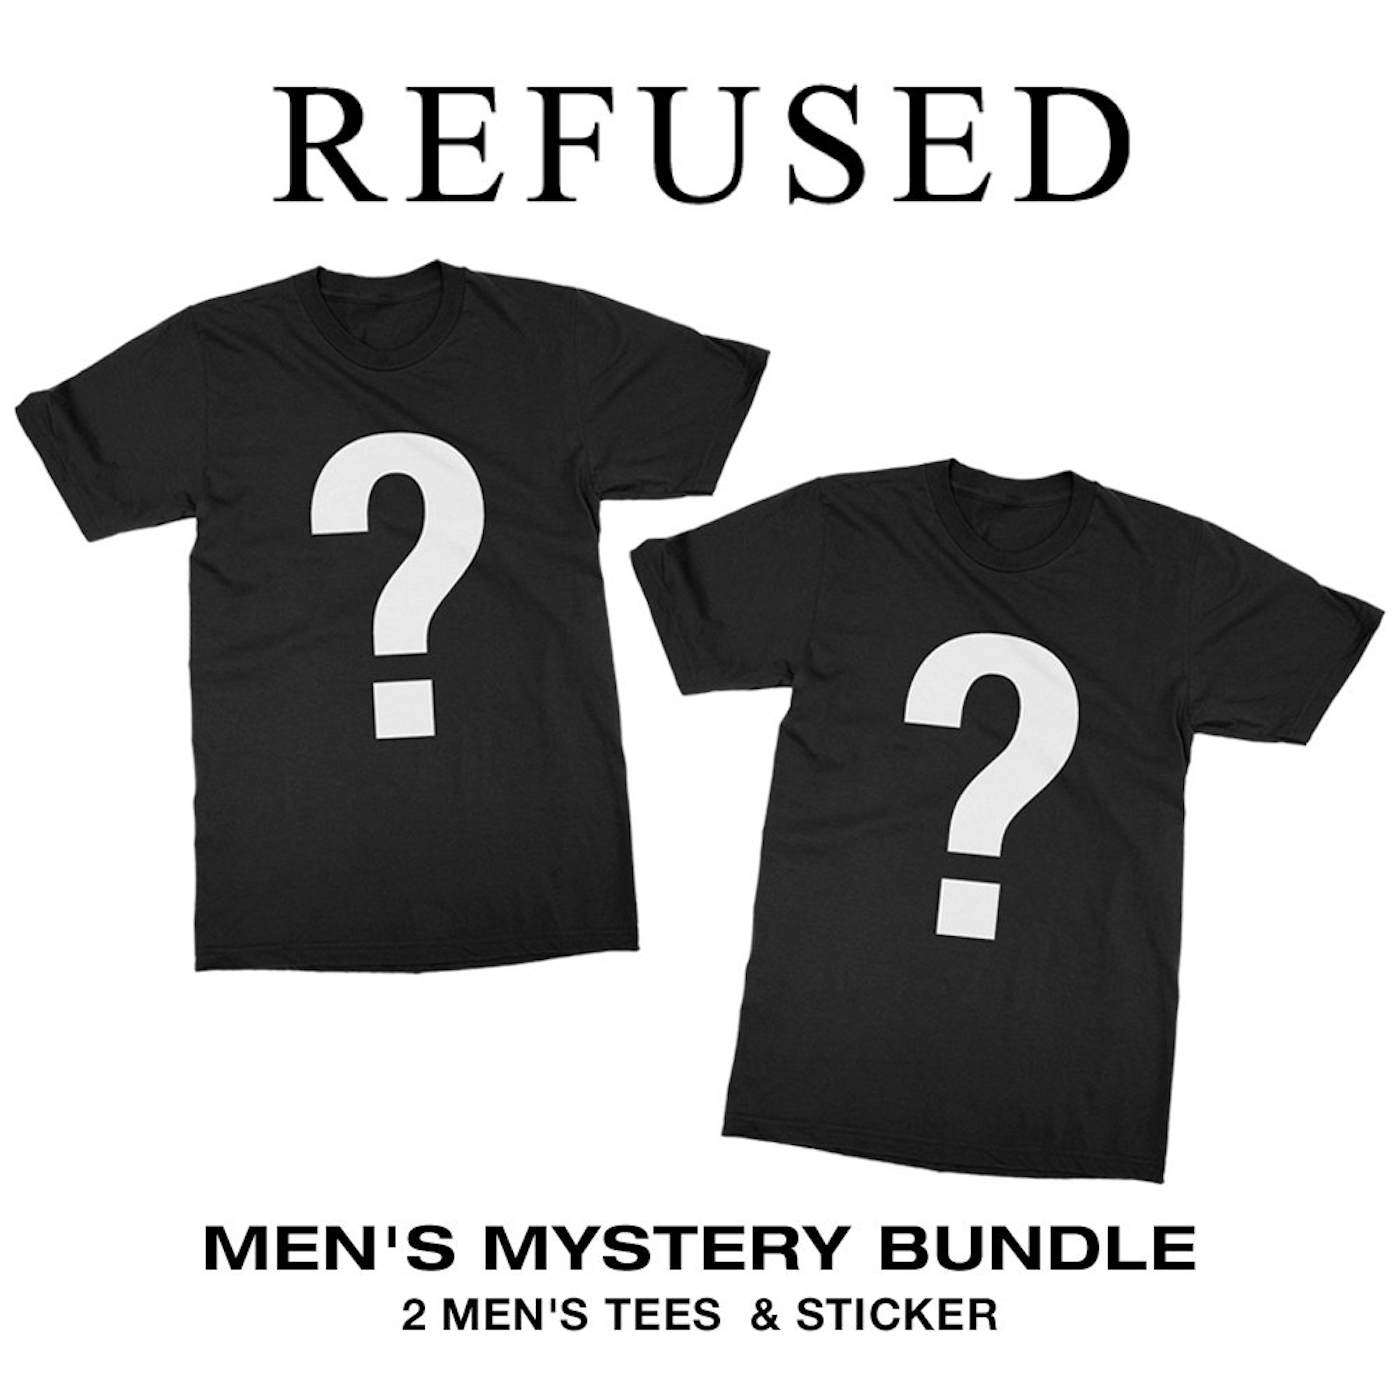 Refused Mystery Bundle